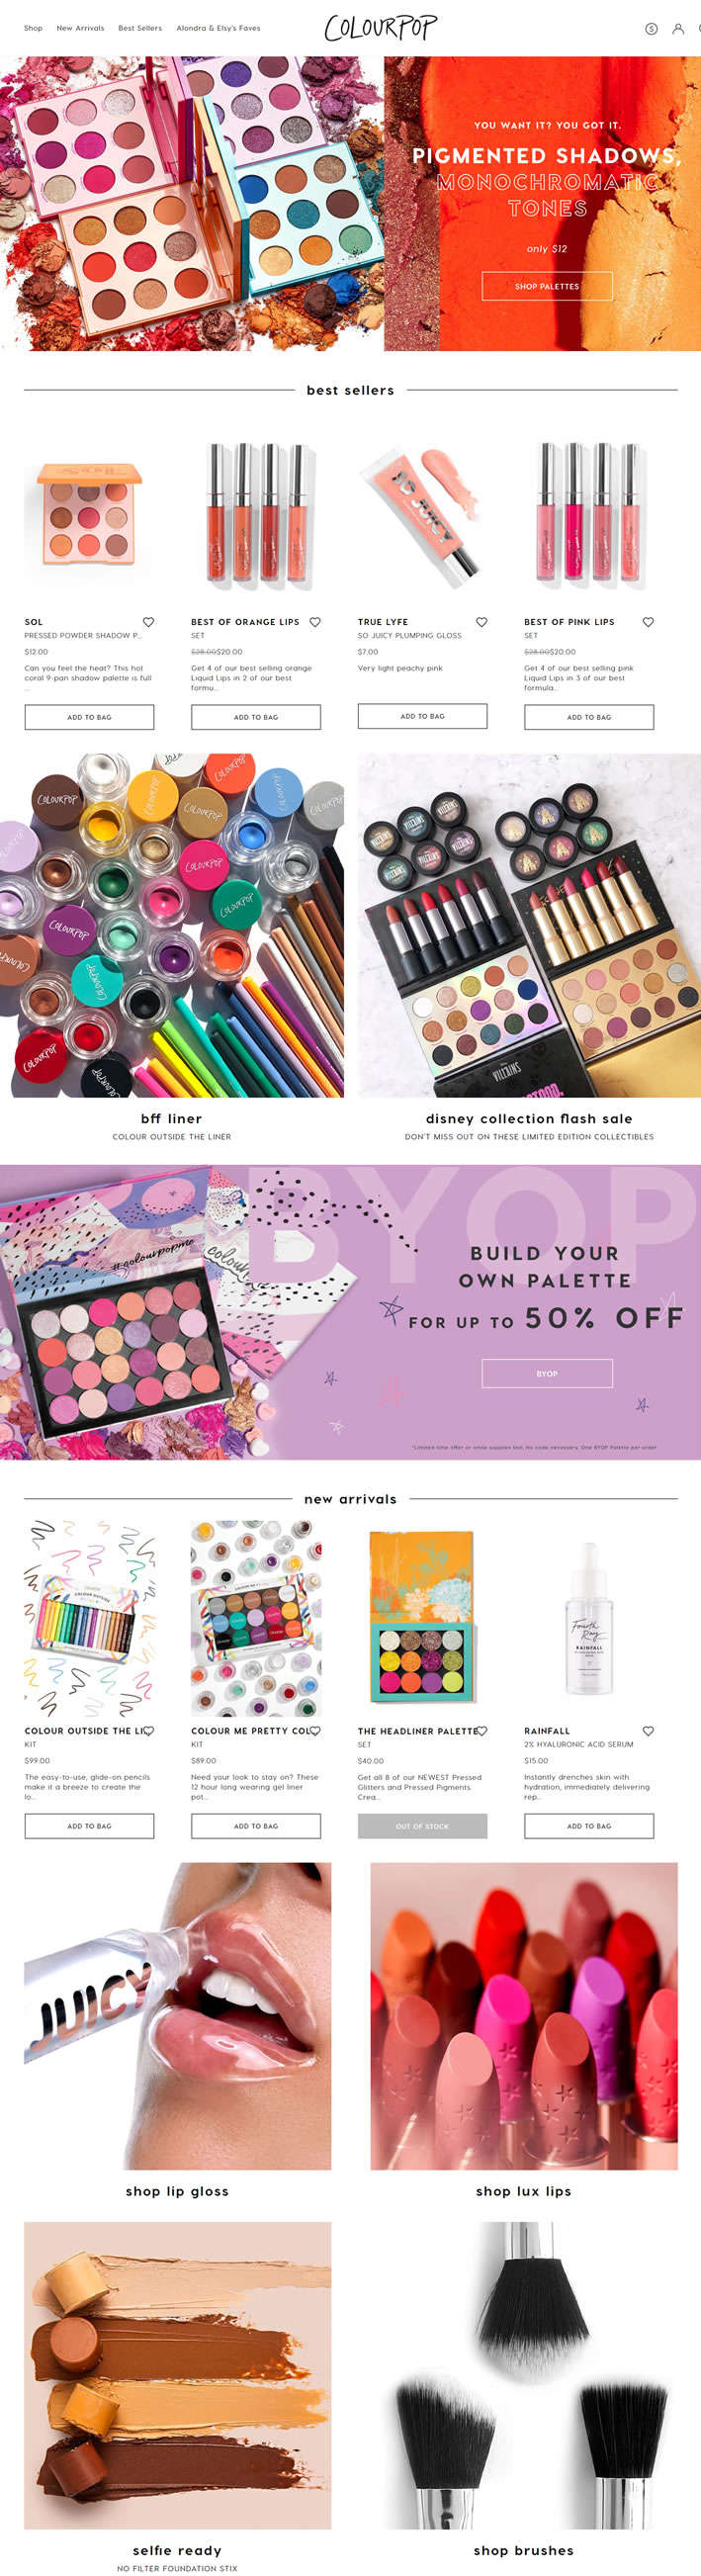 ColourPop Official Site: Los Angeles Cosmetics Brand